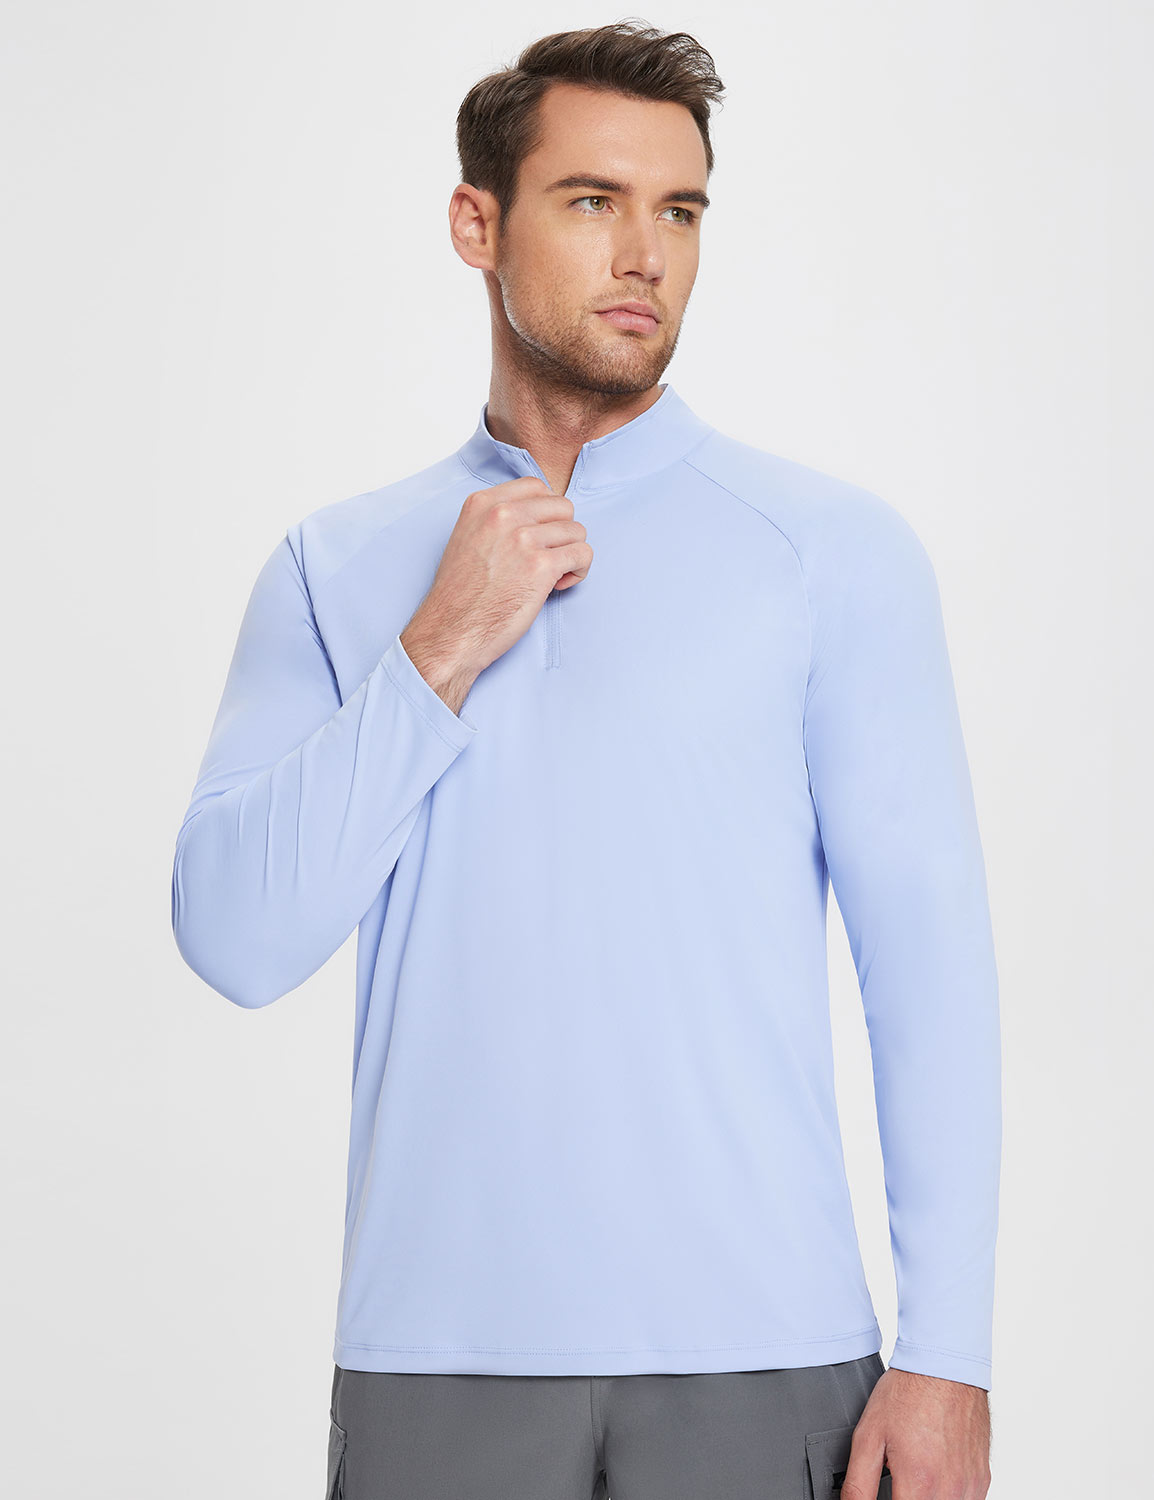 BALEAF Men's Sun Protection Shirts UV SPF T-Shirts 1/4 Zip Pullover UPF 50+  Long 691166452088